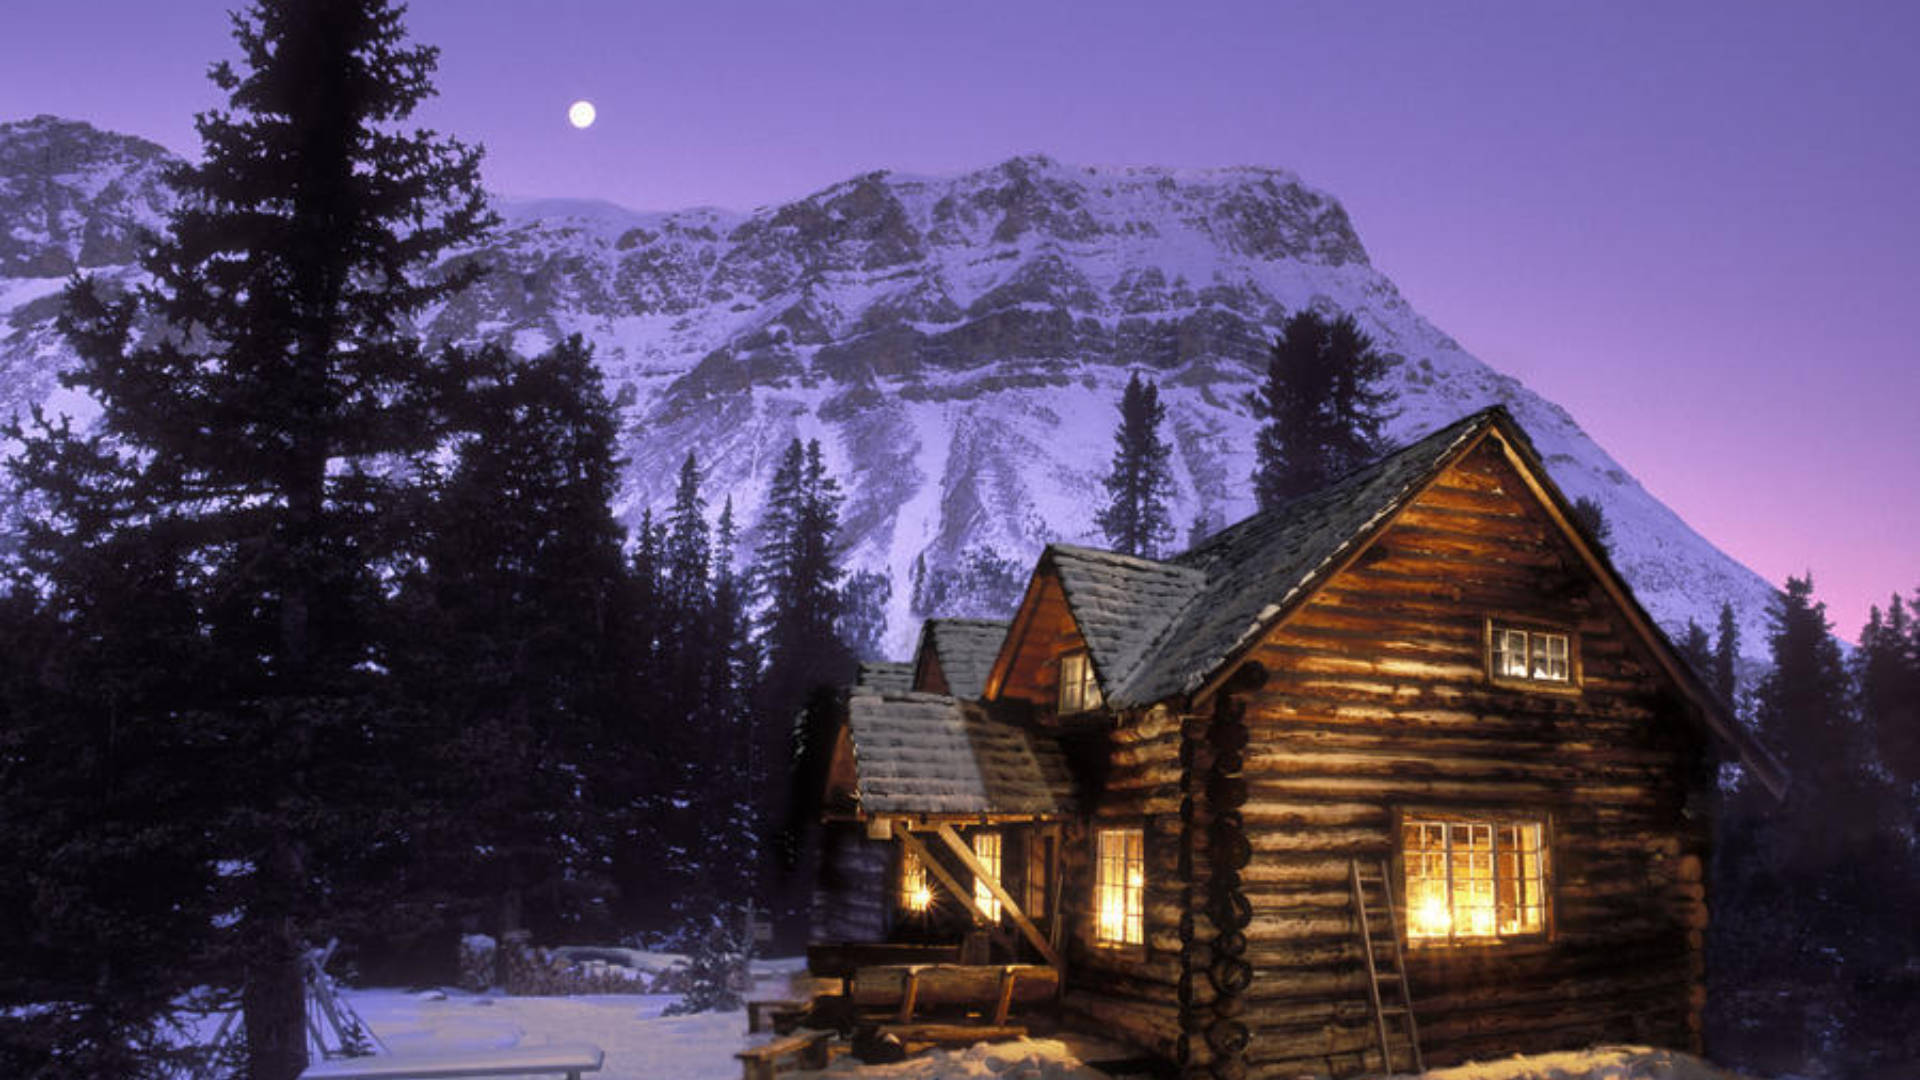 Snowy Mountain Behind Cozy Winter Cabin Wallpaper